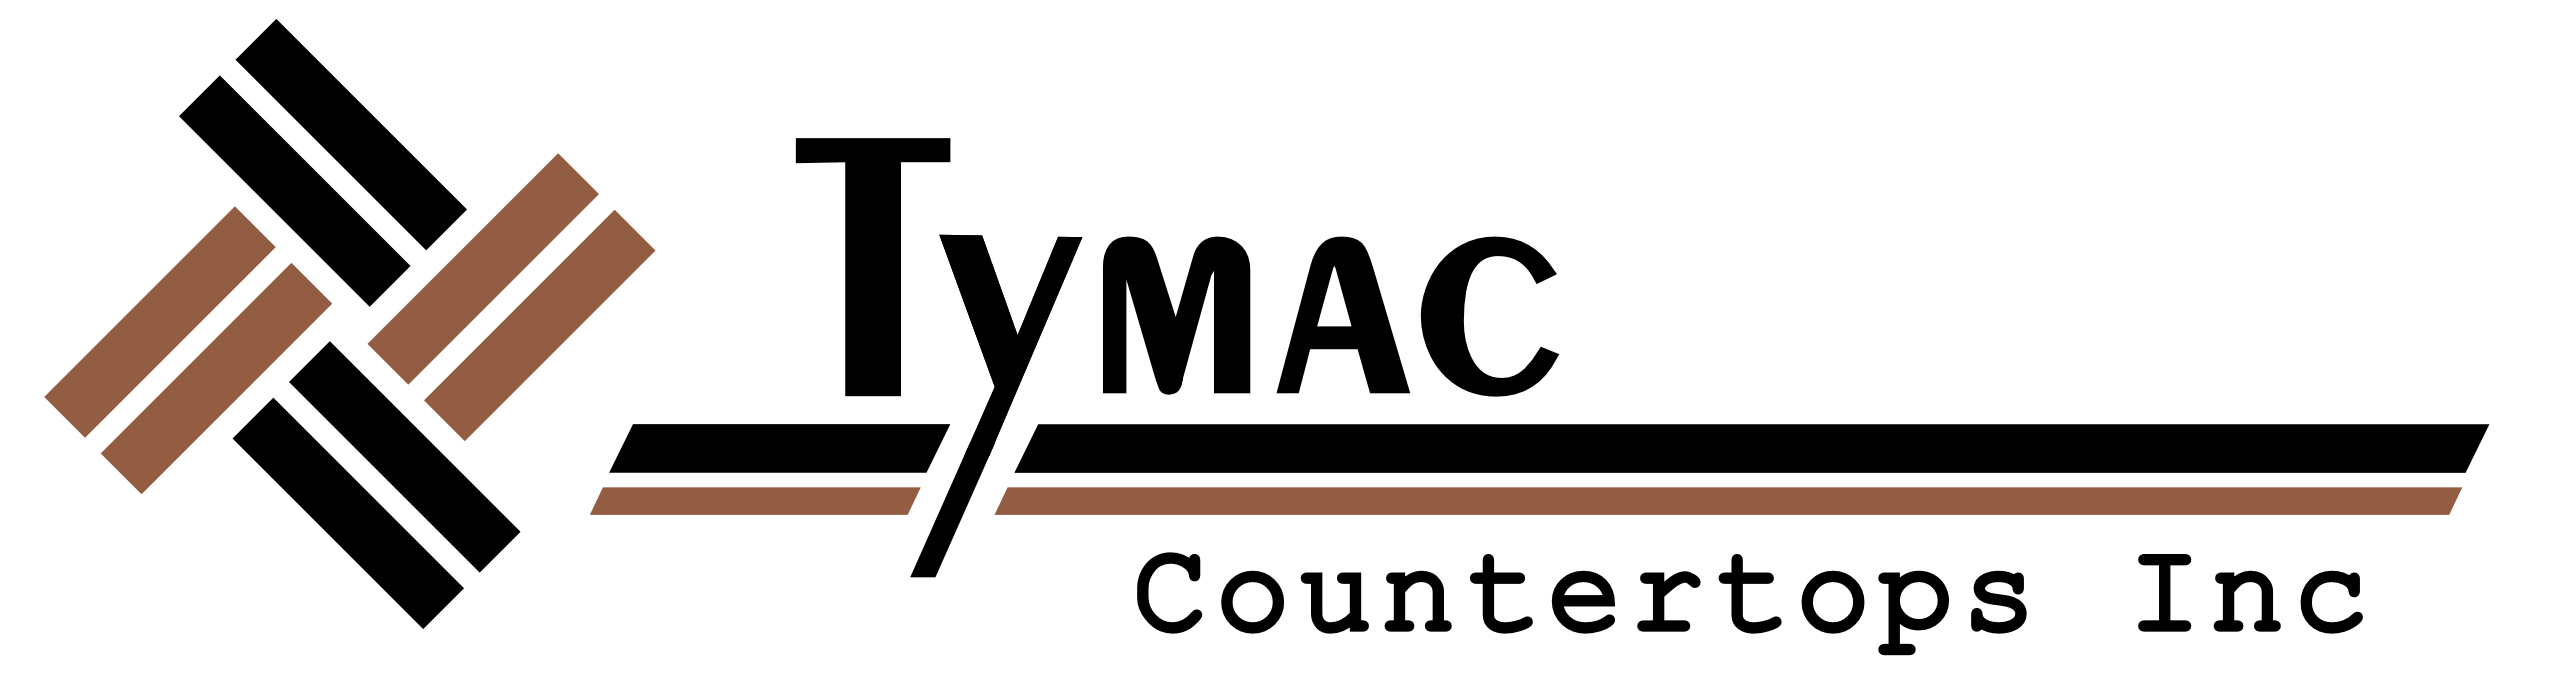 Tymac Countertops, Inc. Logo